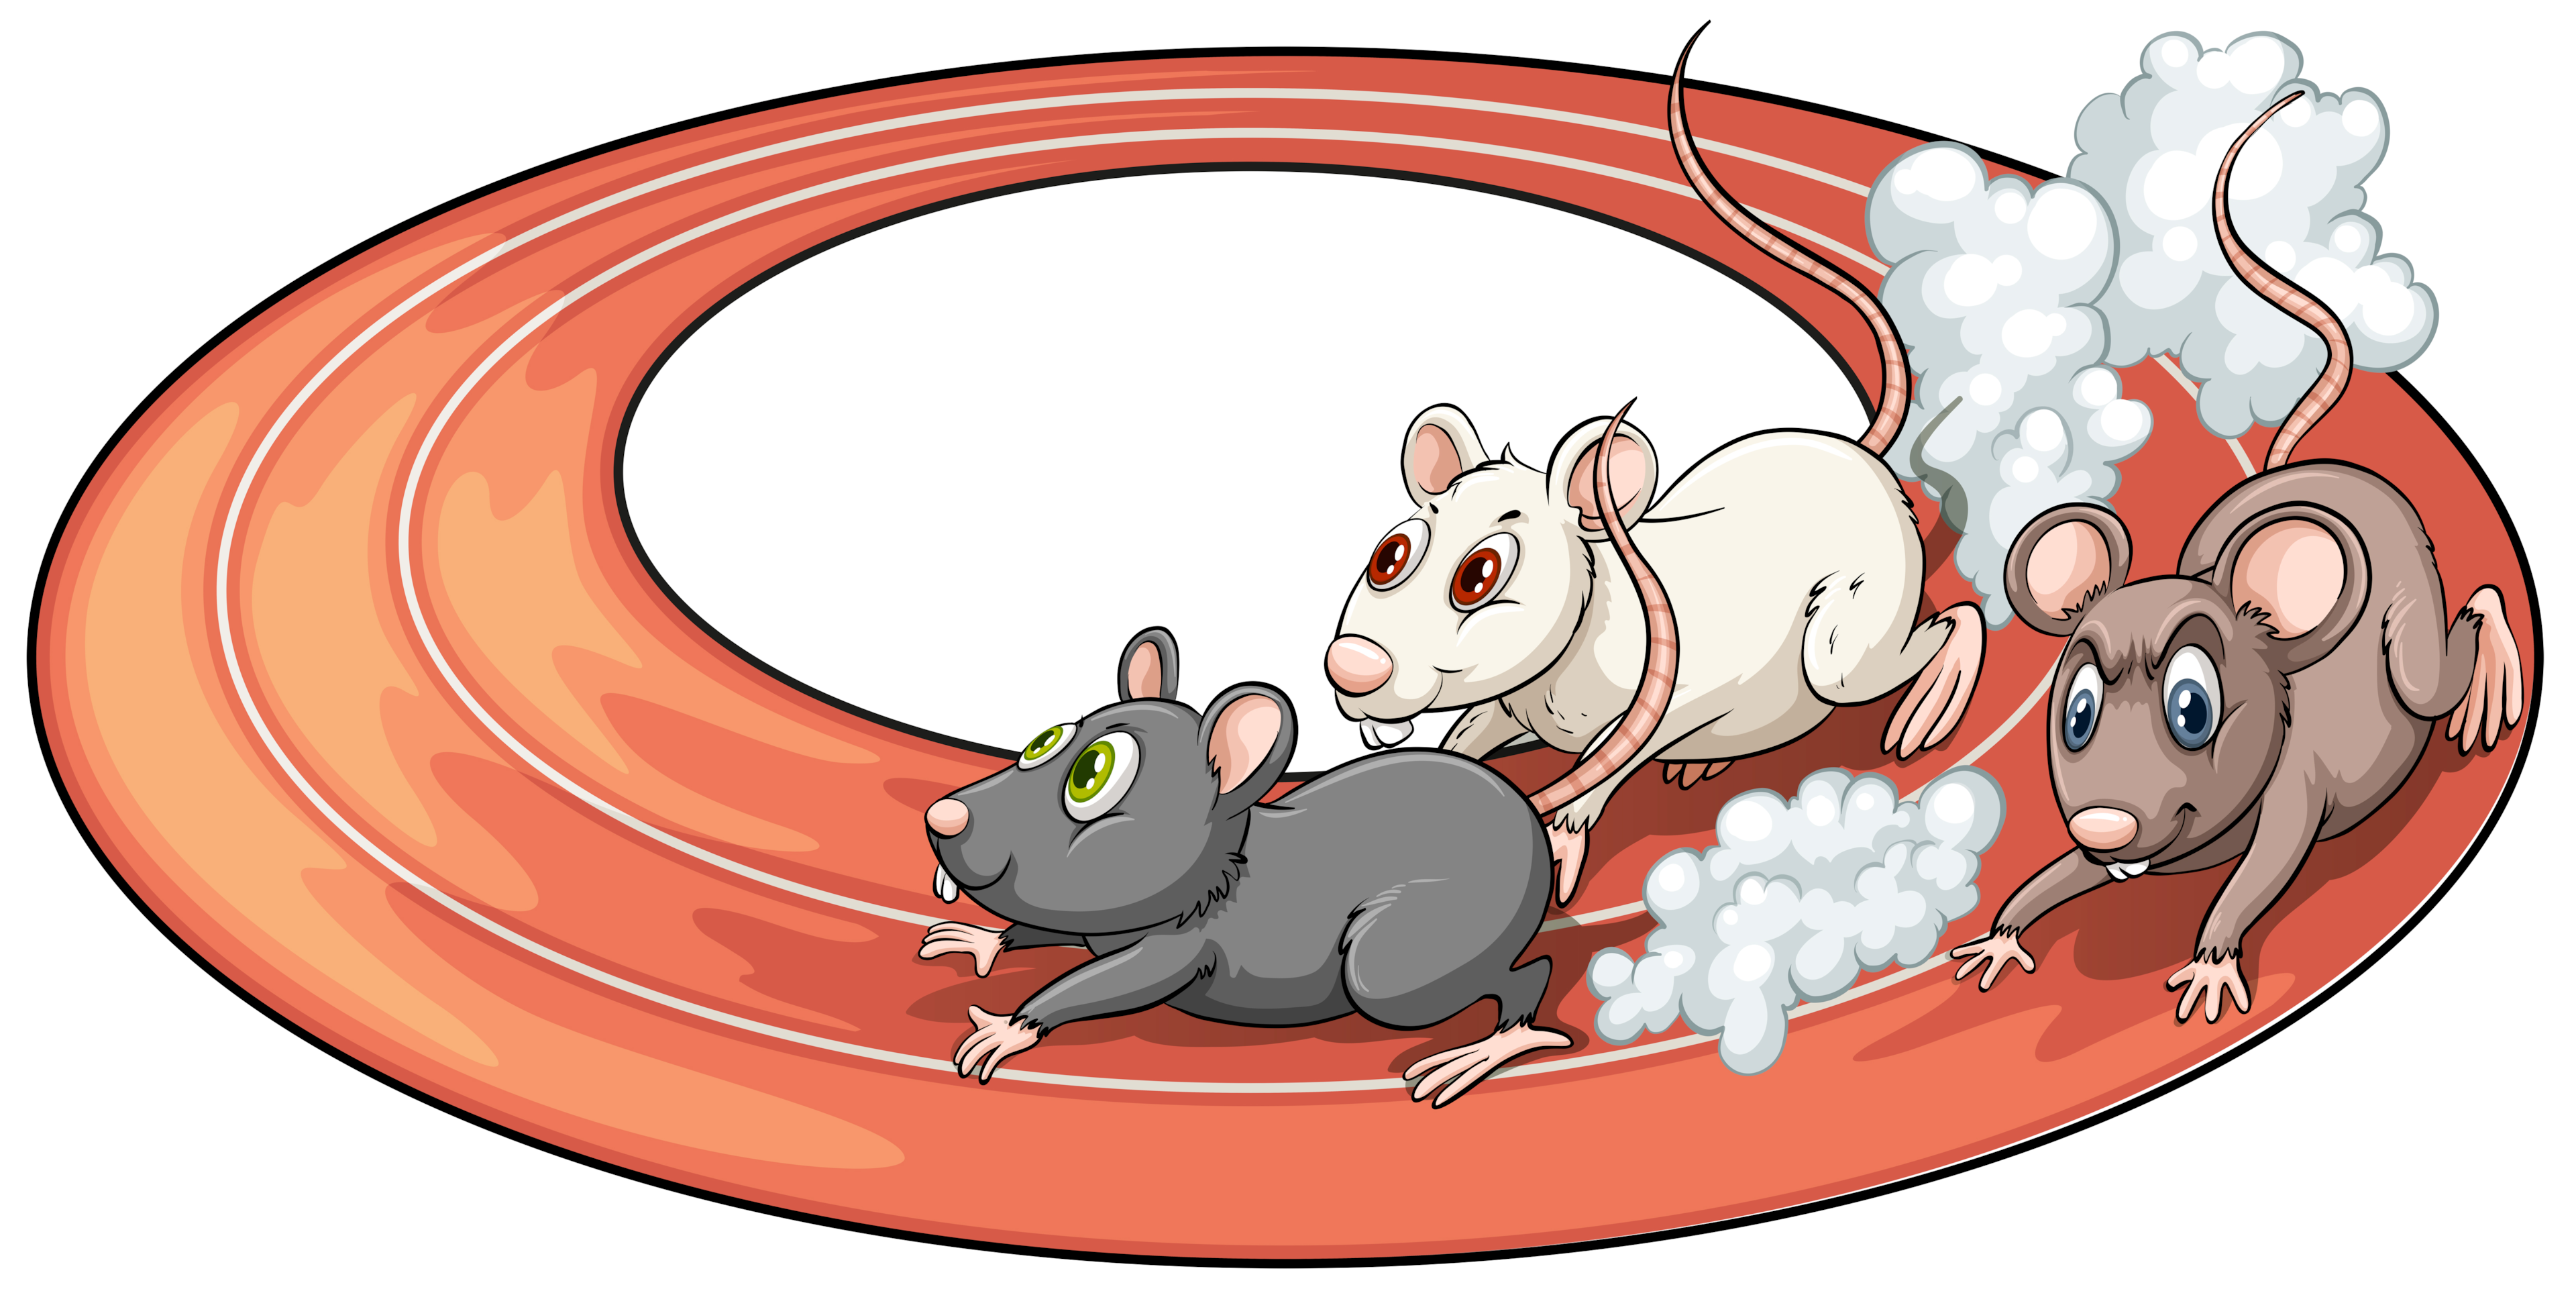 Ratten laufen im Hamsterrad